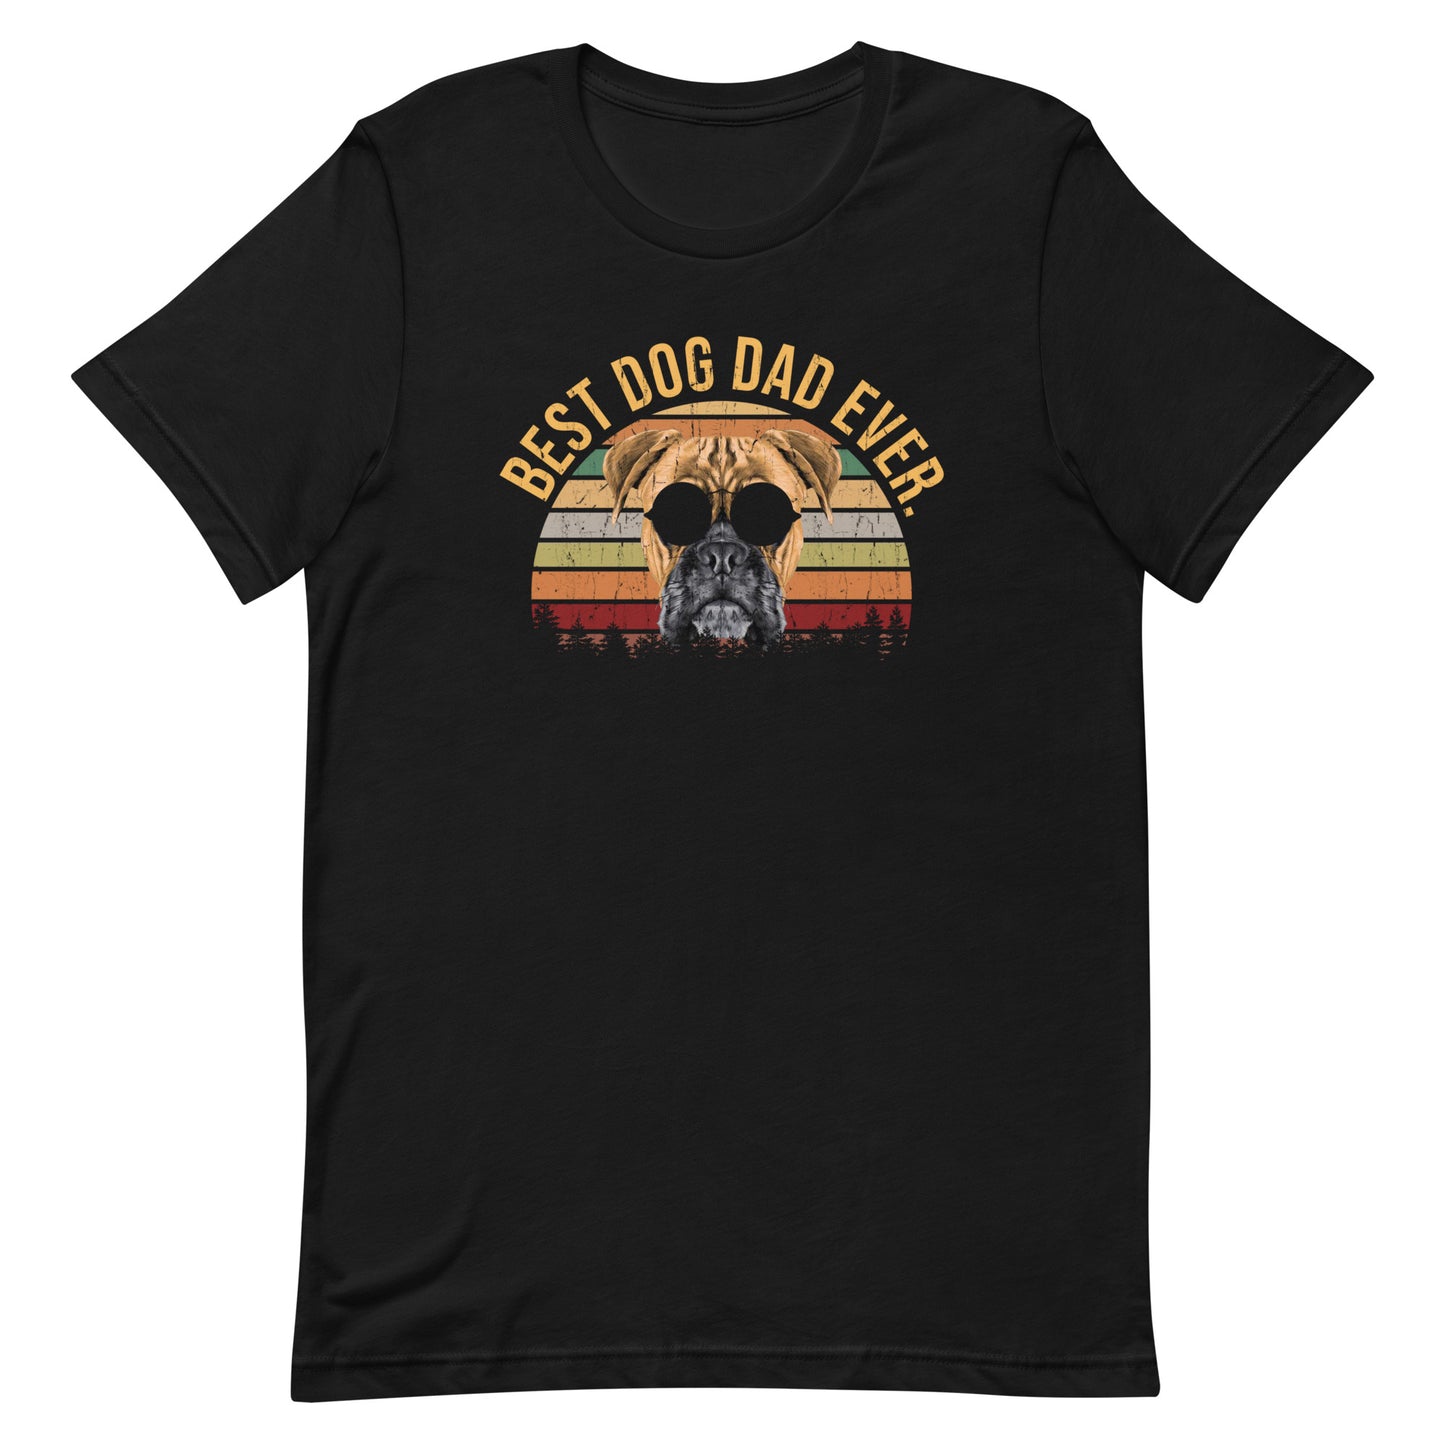 Best Dog Dad Ever - Dog Dad Shirt